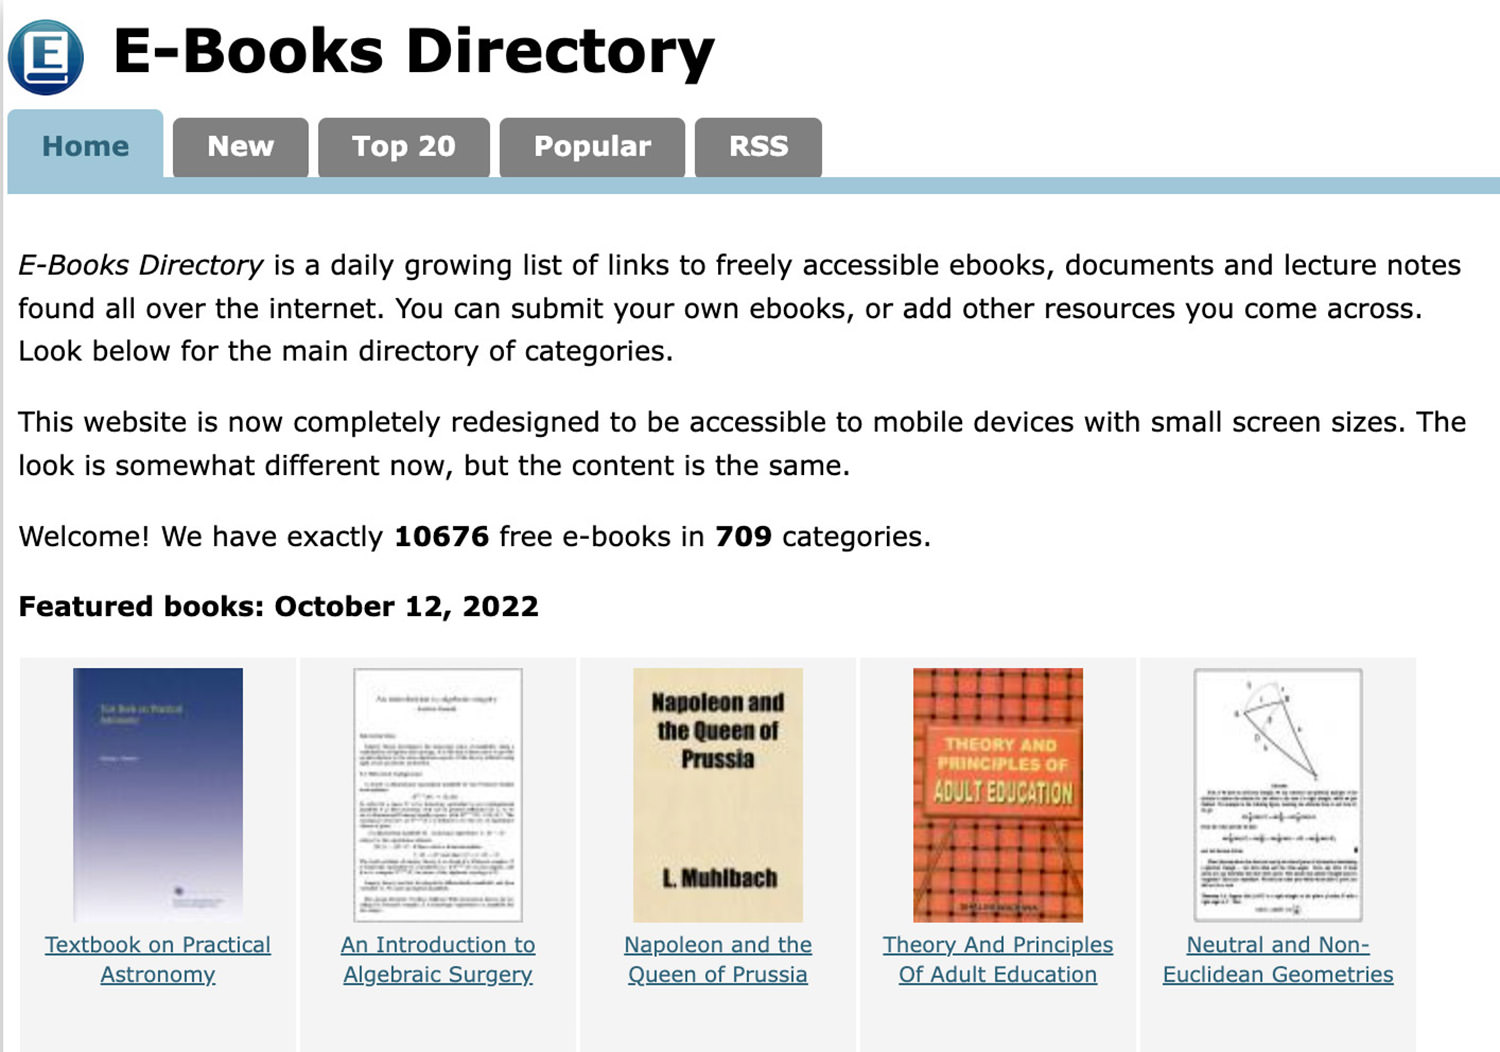 Image of E-Books Directory website